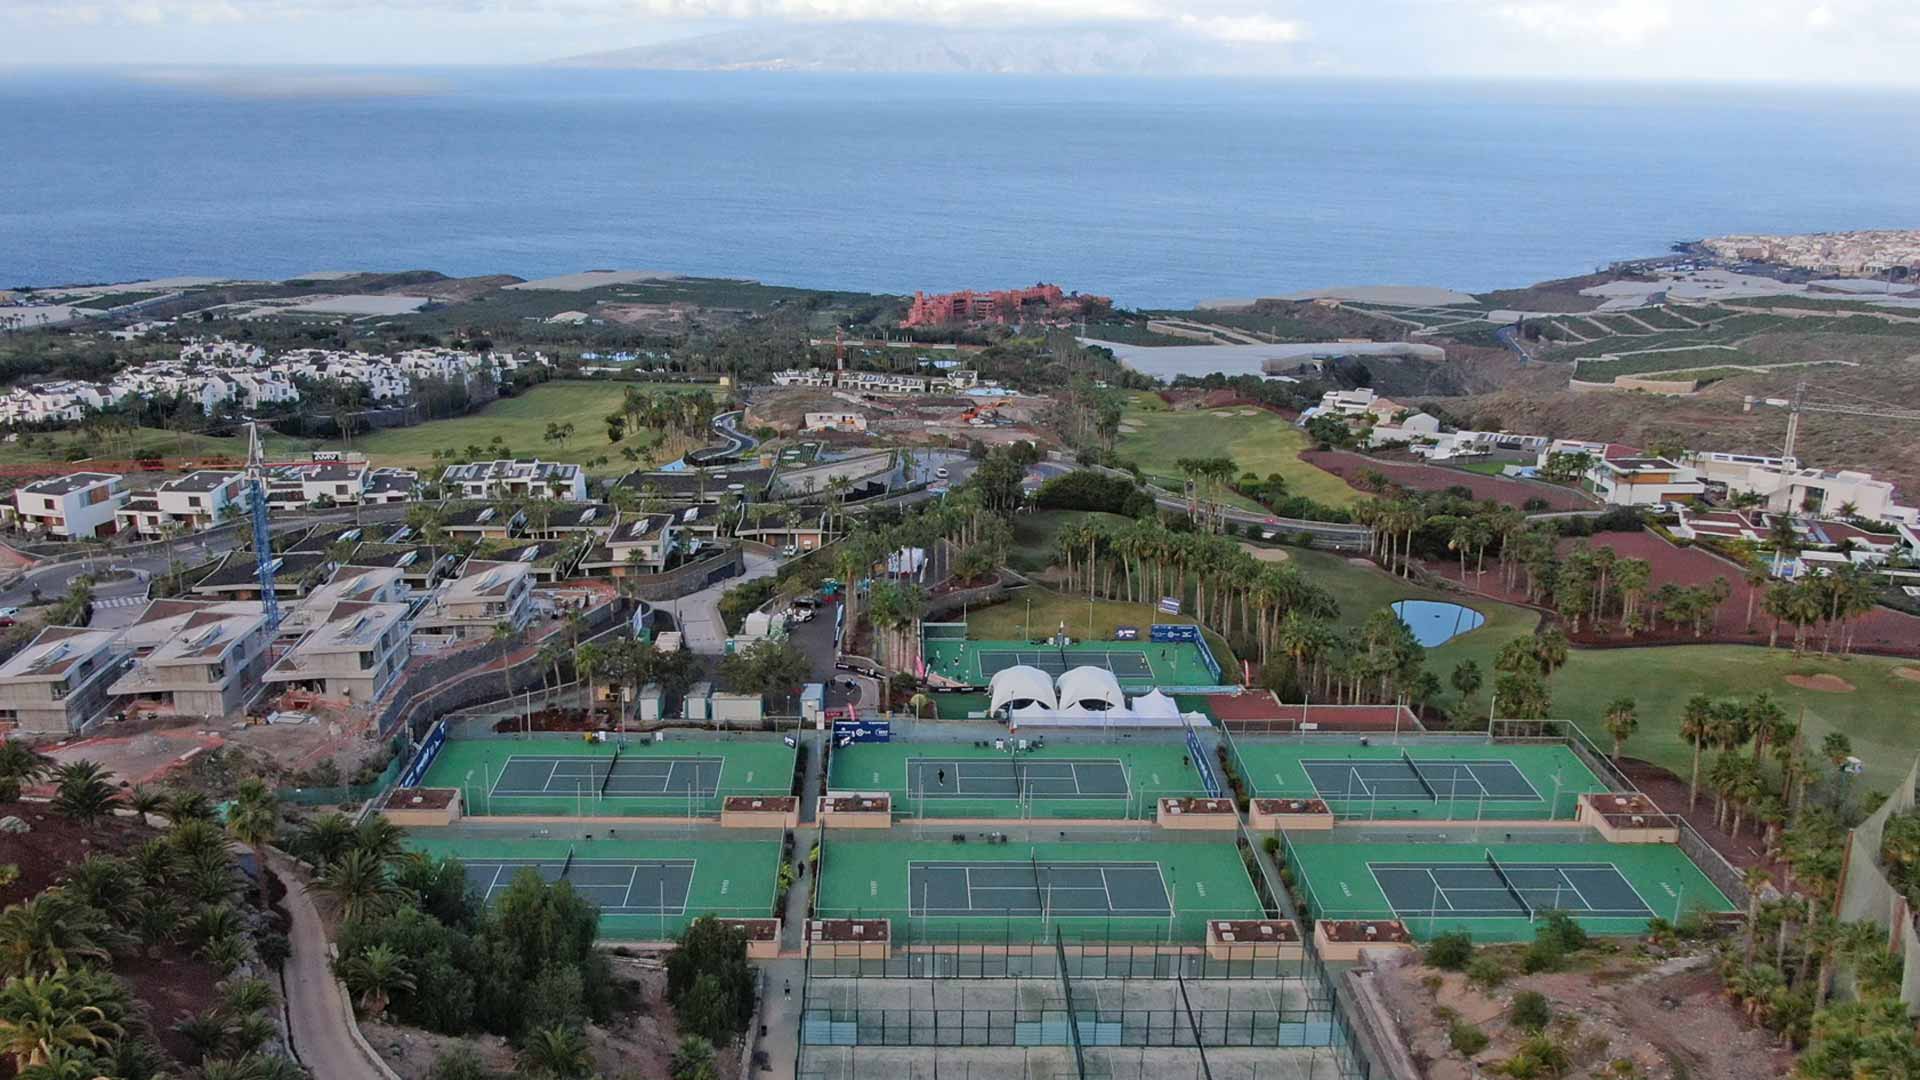 Abama Tennis Academy, host site of the Tenerife Challenger.